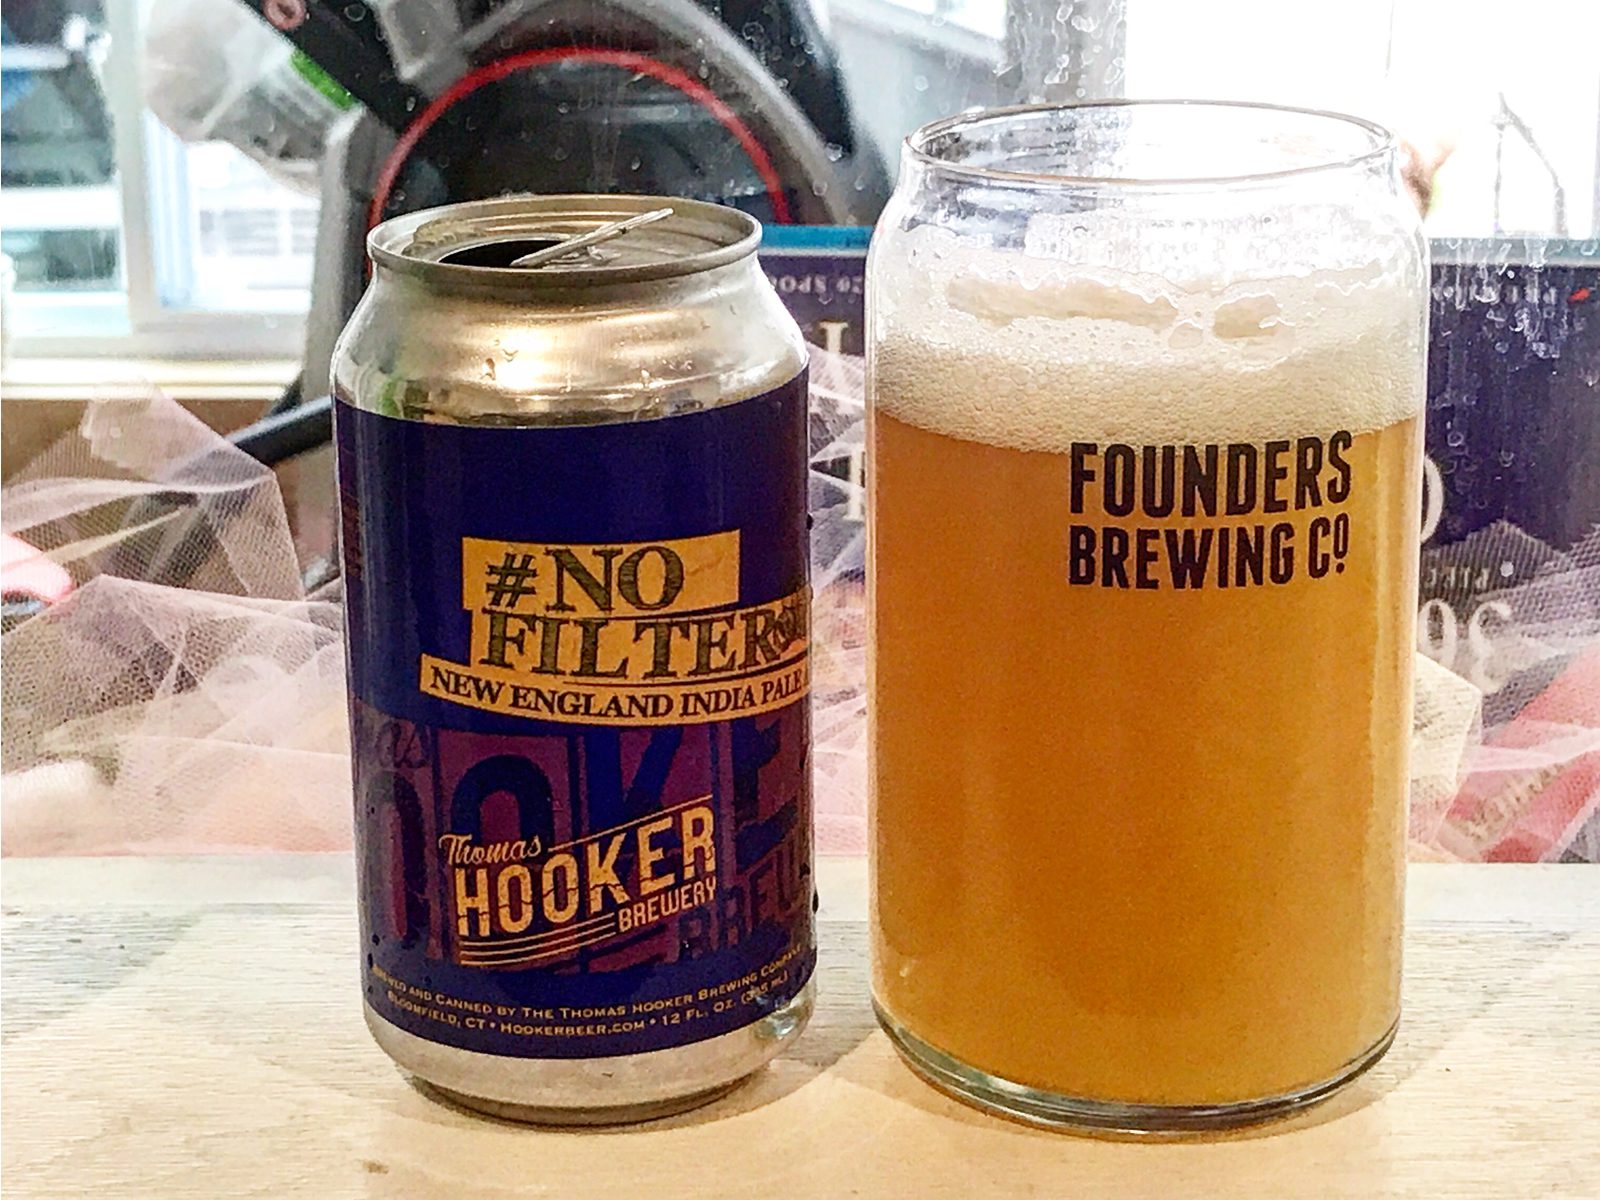 Thomas Hooker Brewery: #NOFILTER